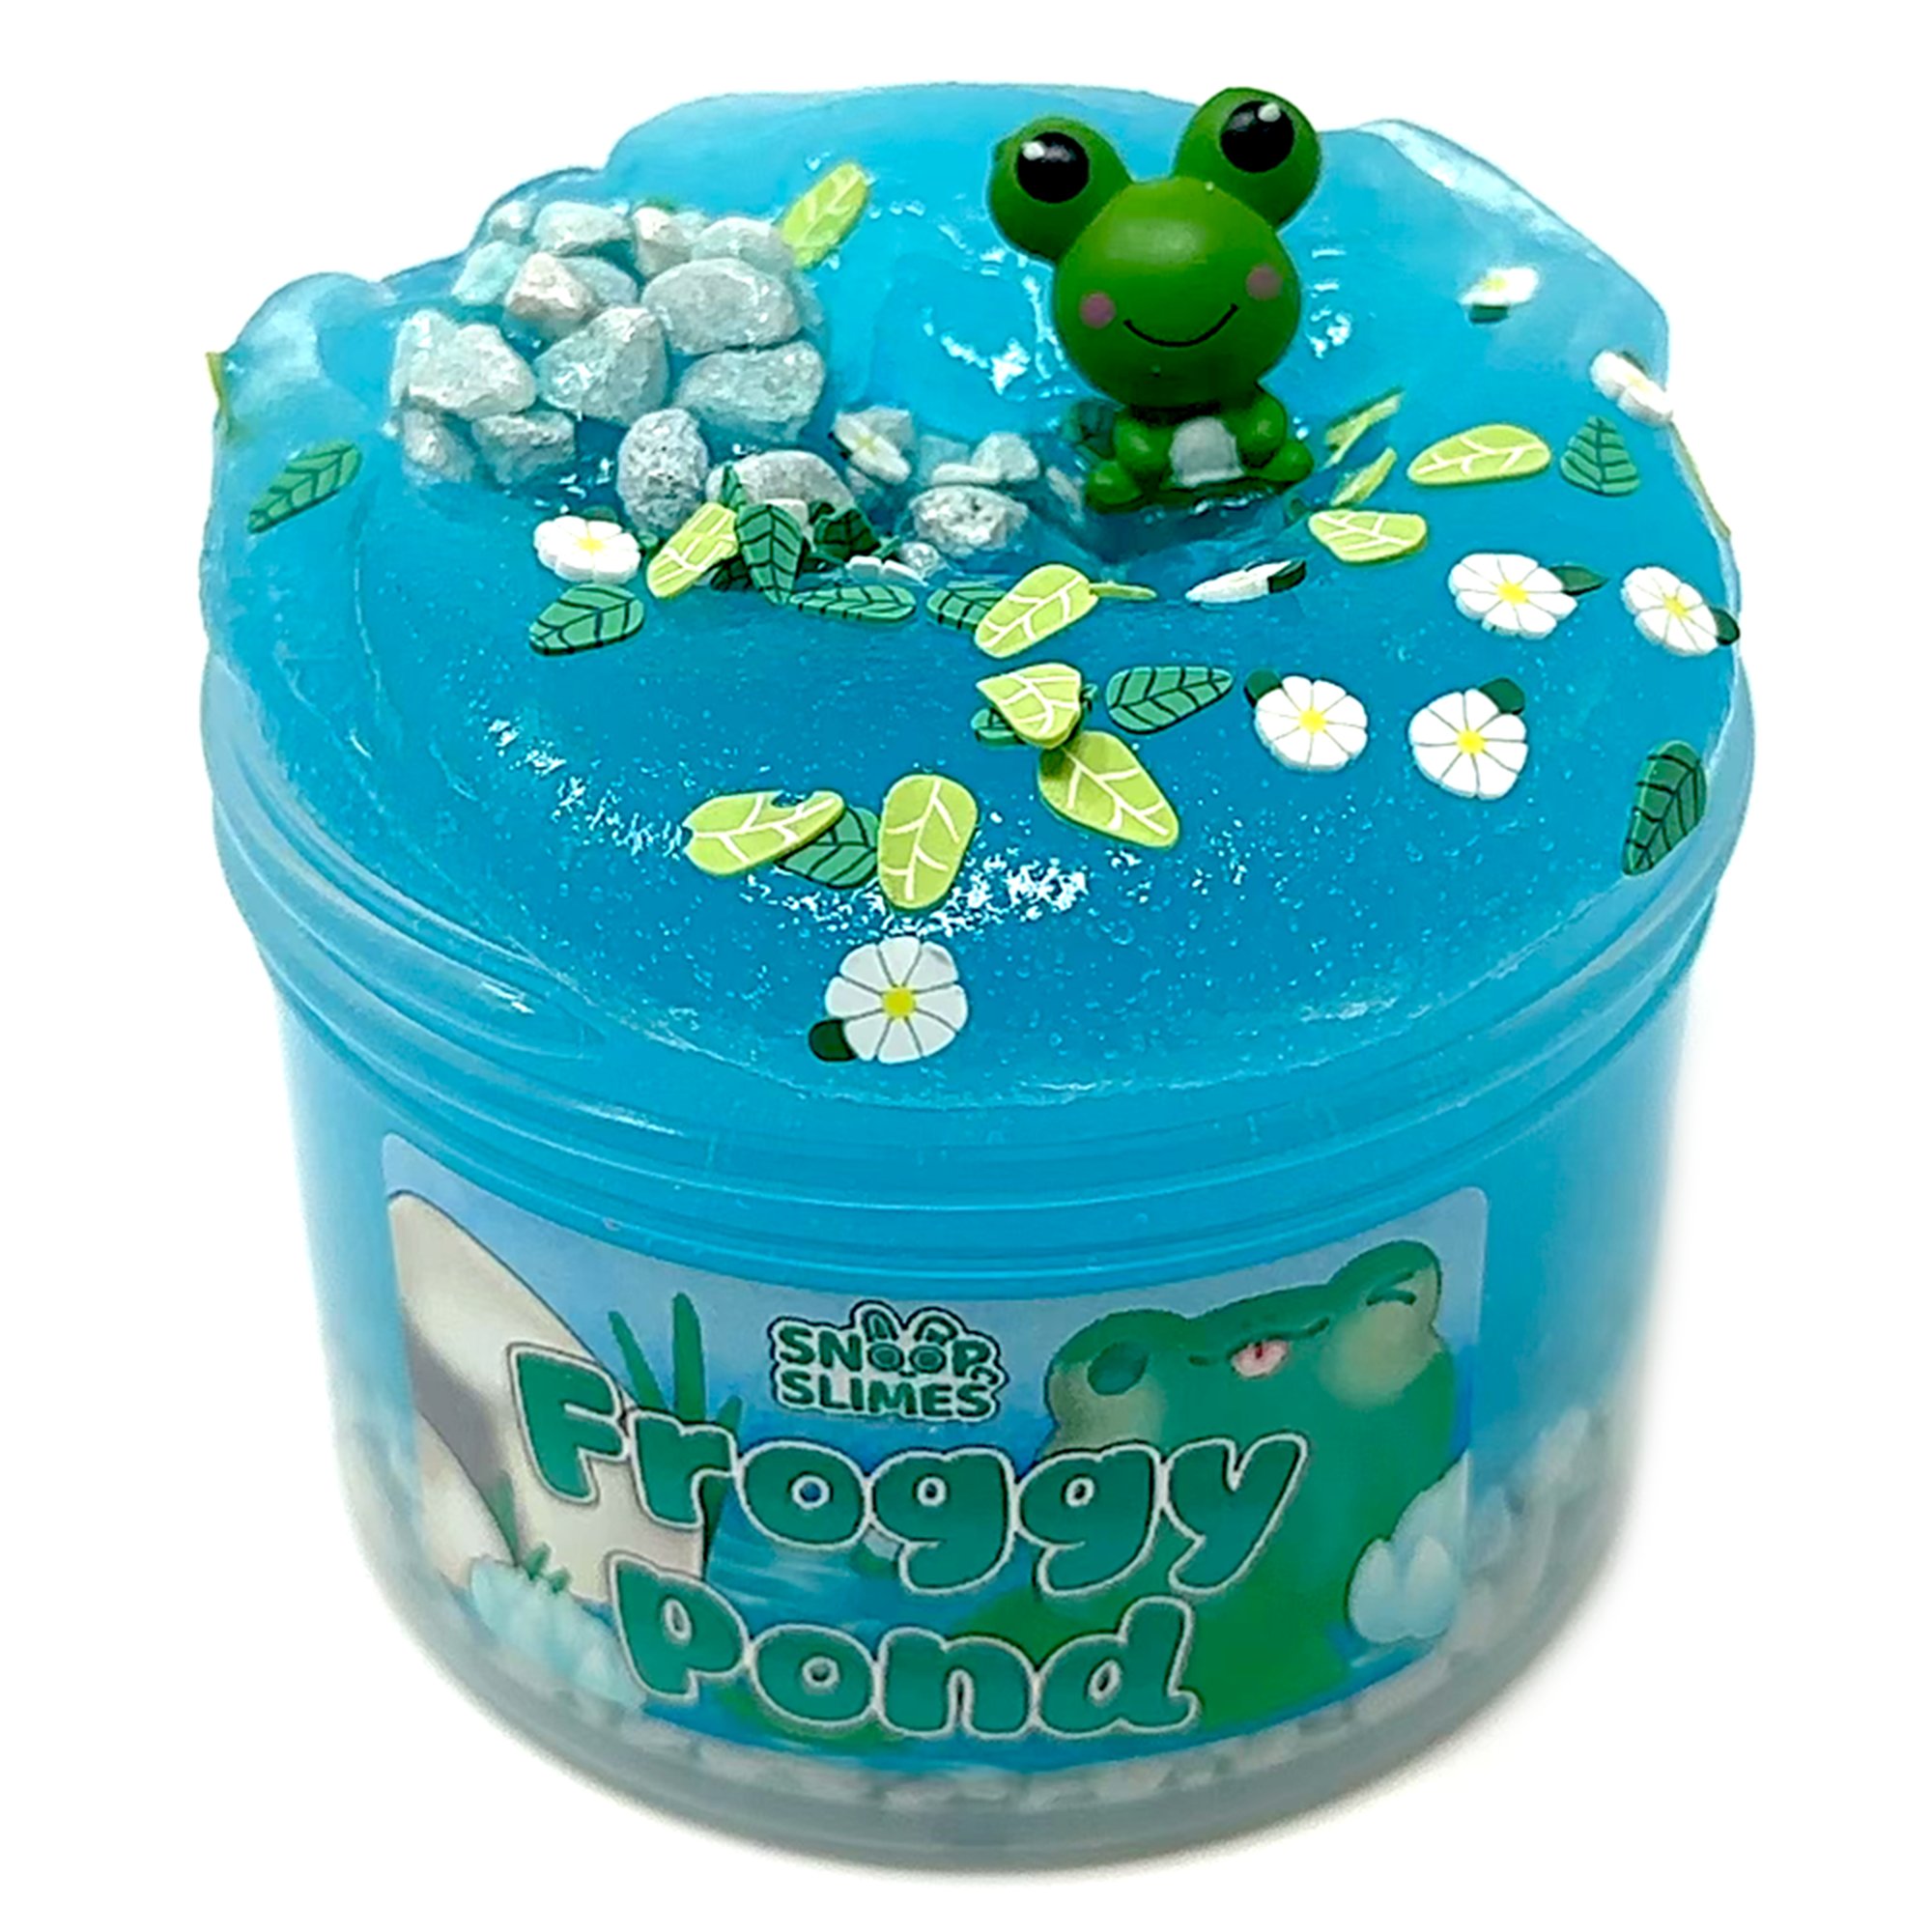 Froggy Pond Slime